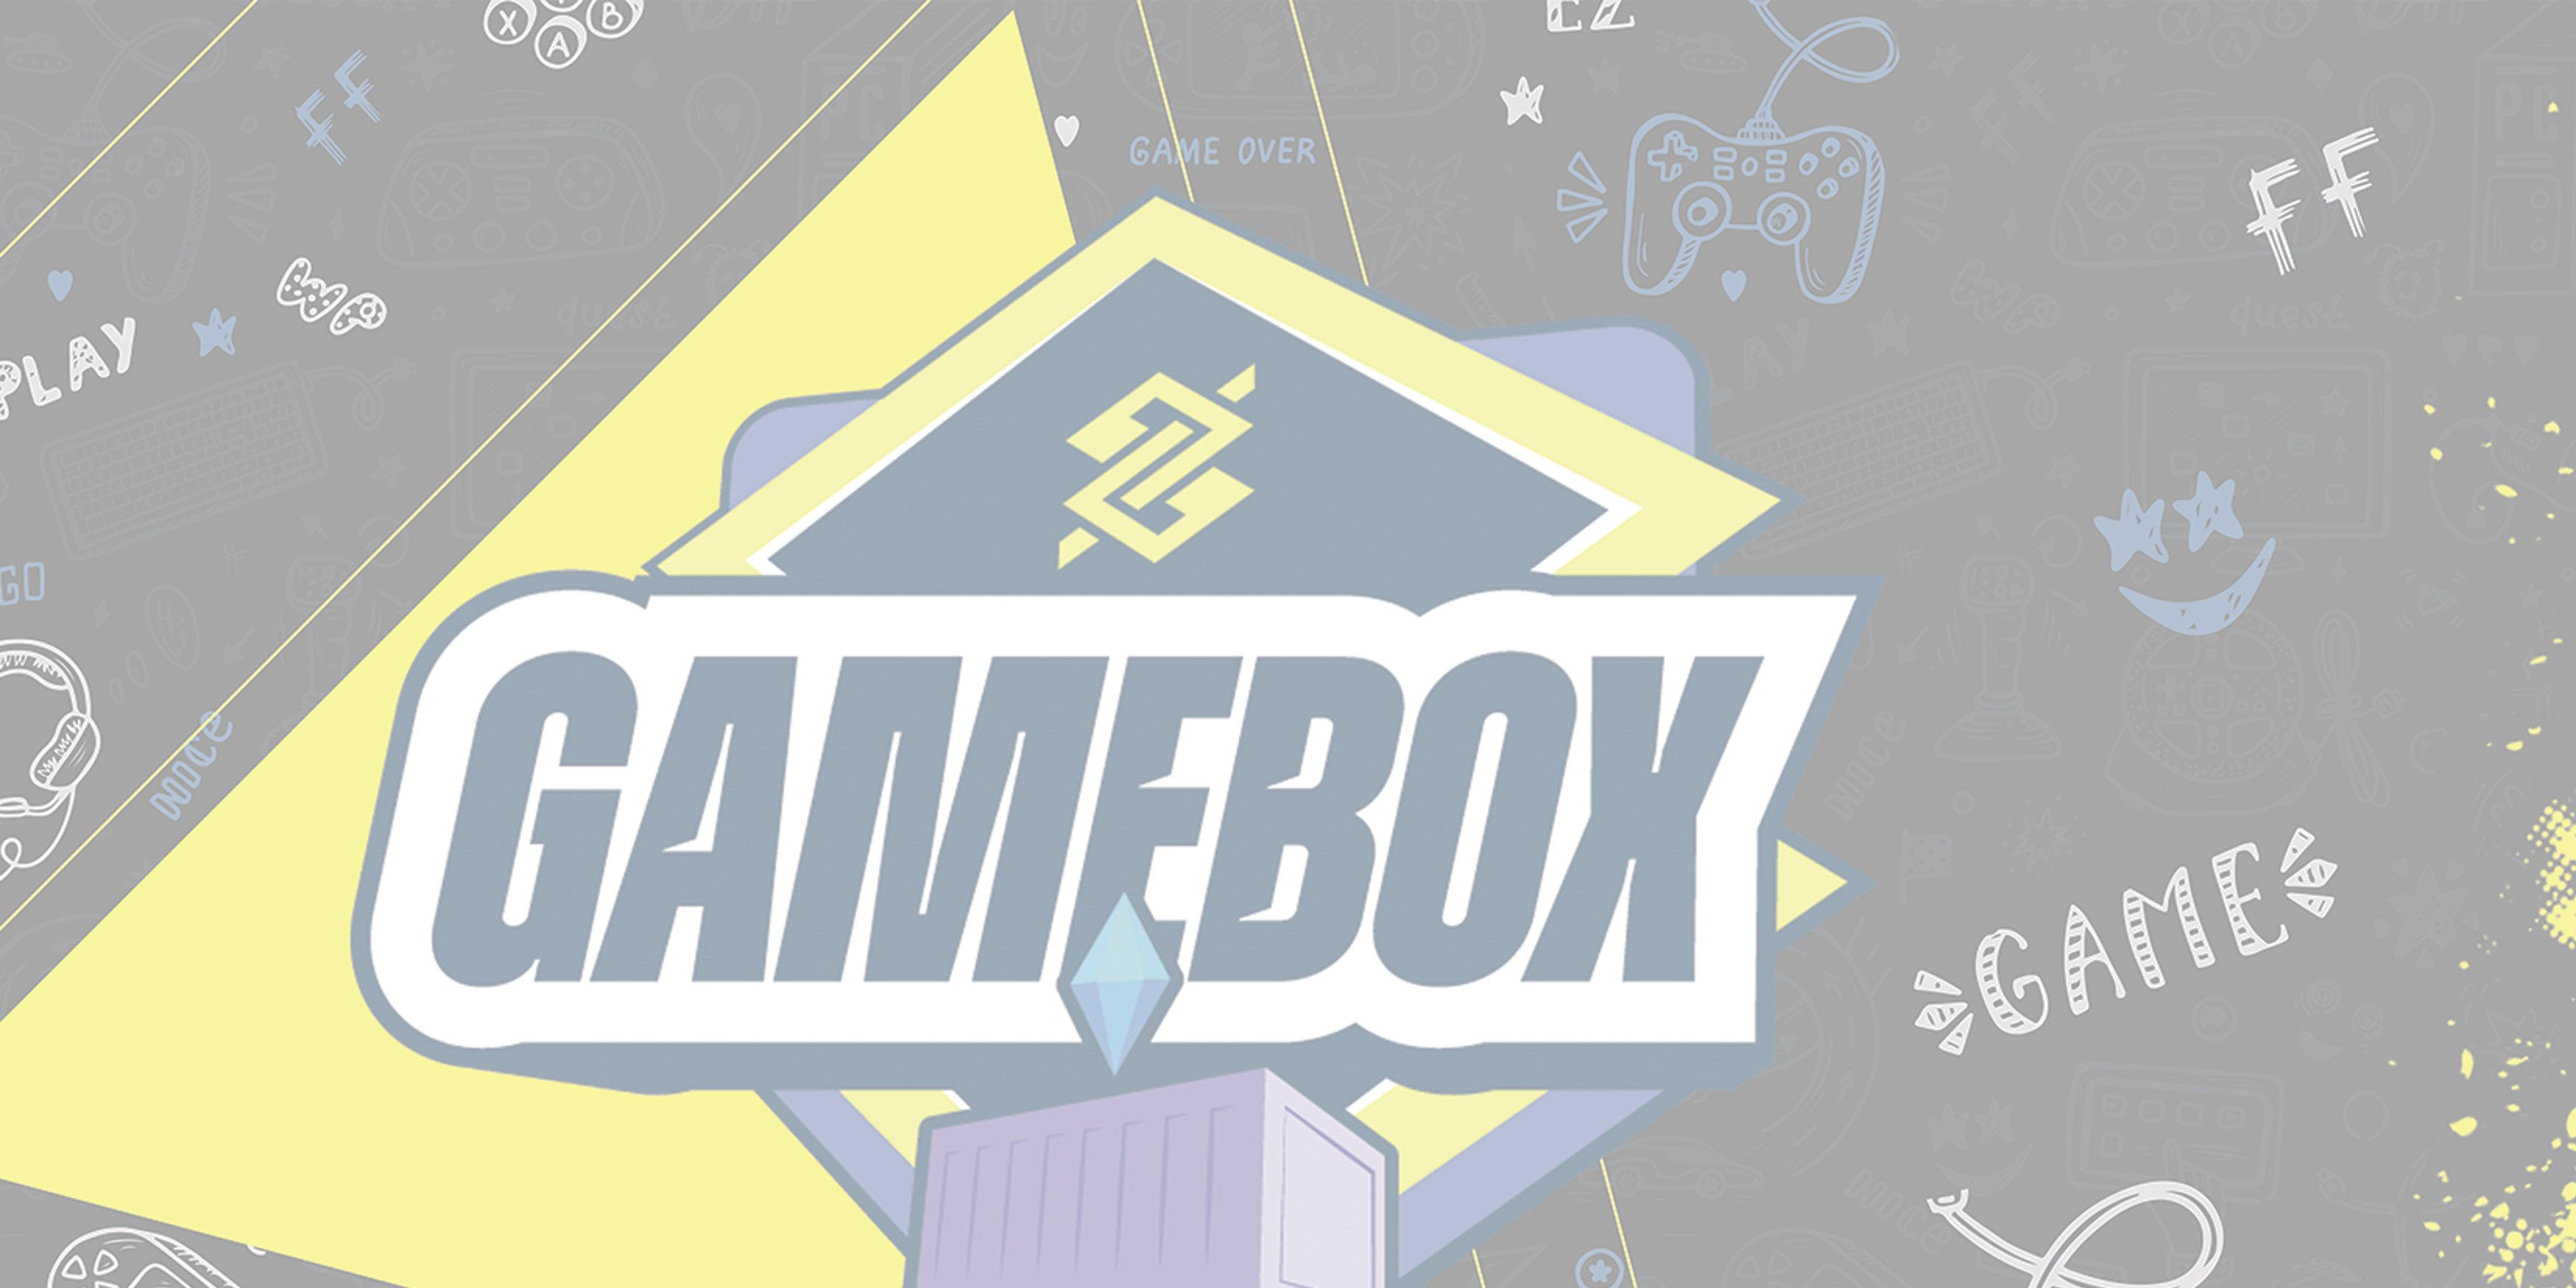 "Gamebox Bb", da MONUMENTA para Banco do Brasil